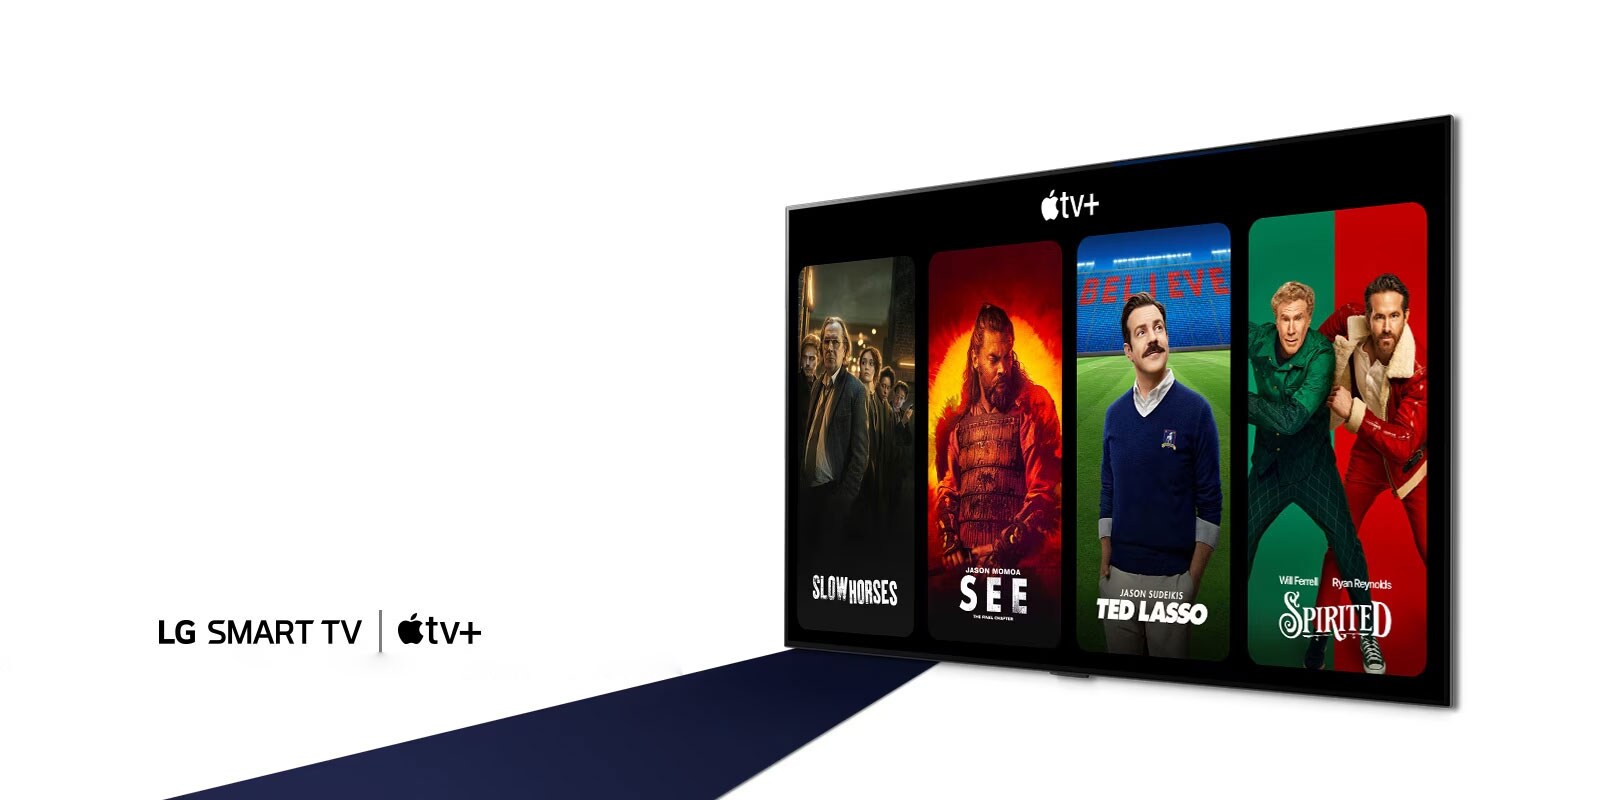 LG OLED 電視的圖片。Apple TV+ 的內容出現在螢幕上，標題是「使用 LG 智慧電視免費享用三個月的 Apple TV+」。